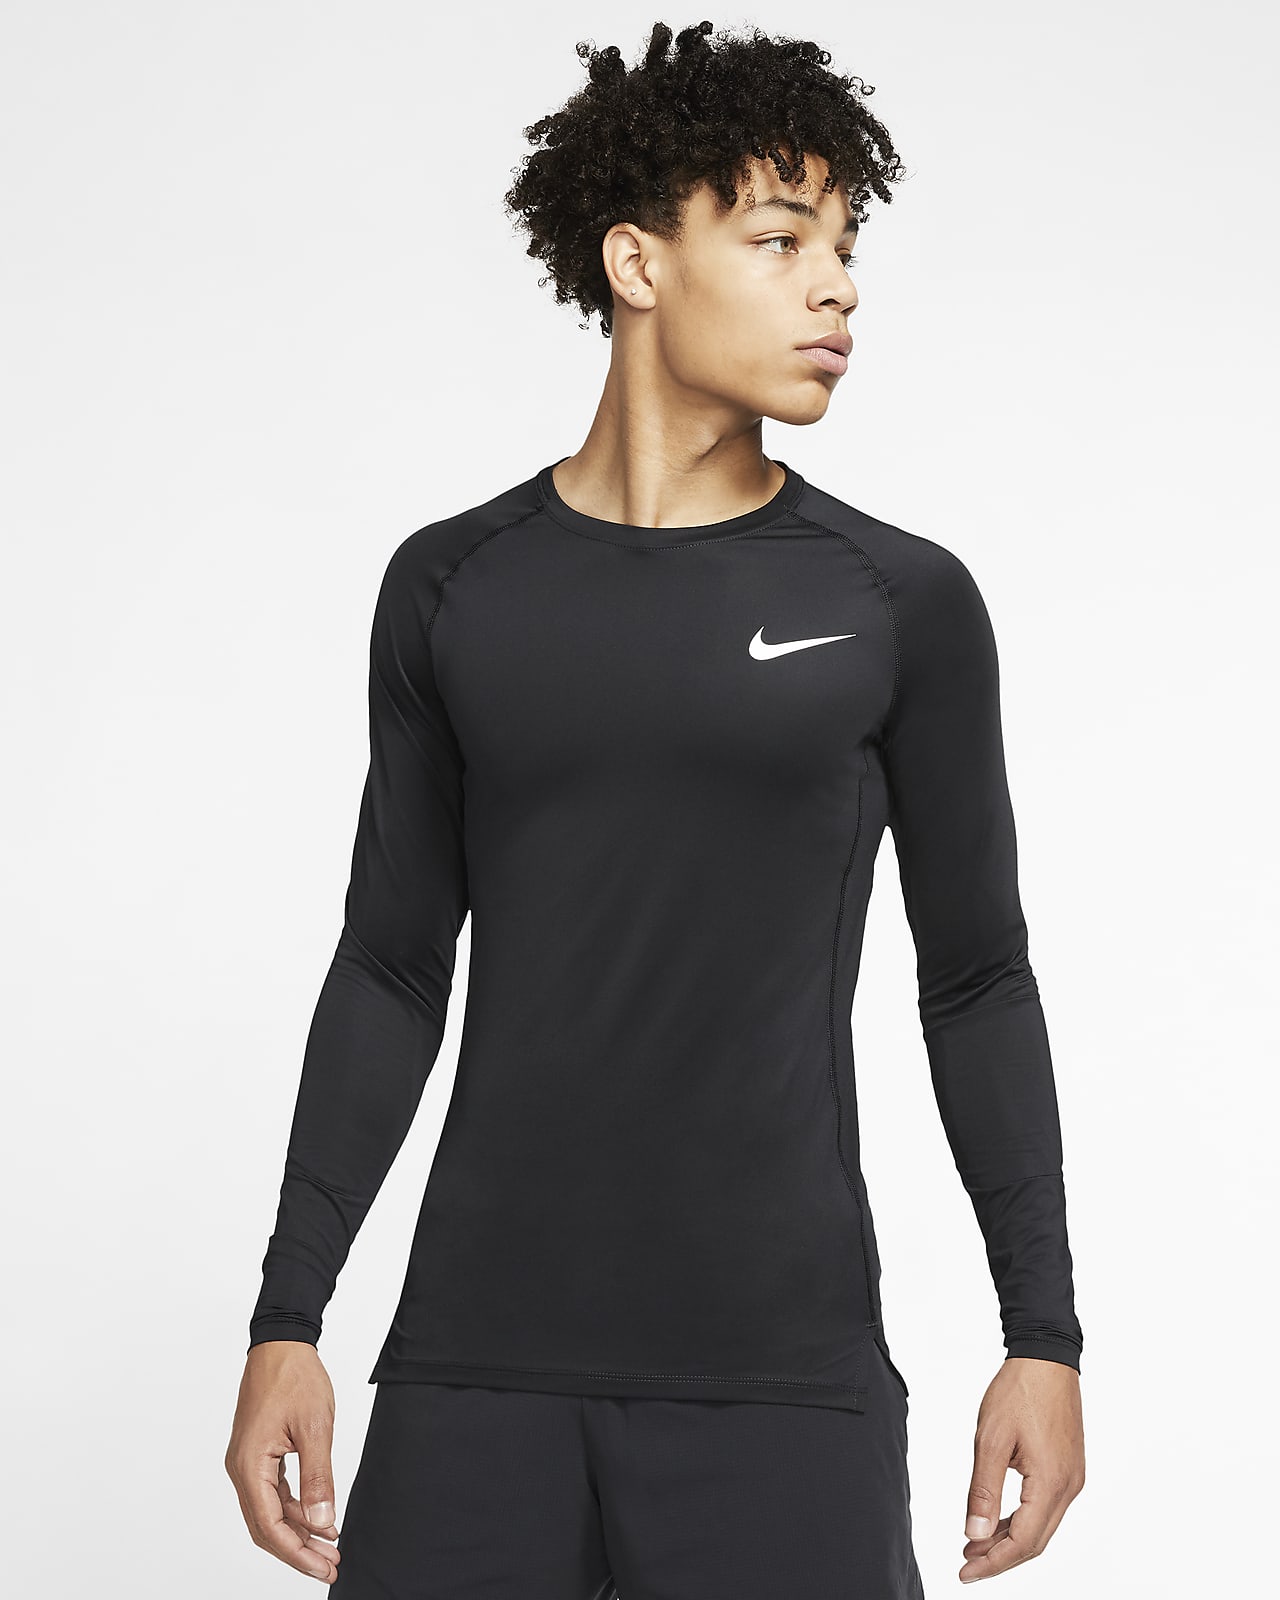 Nike Pro Men's Long-Sleeve Top. Nike SG